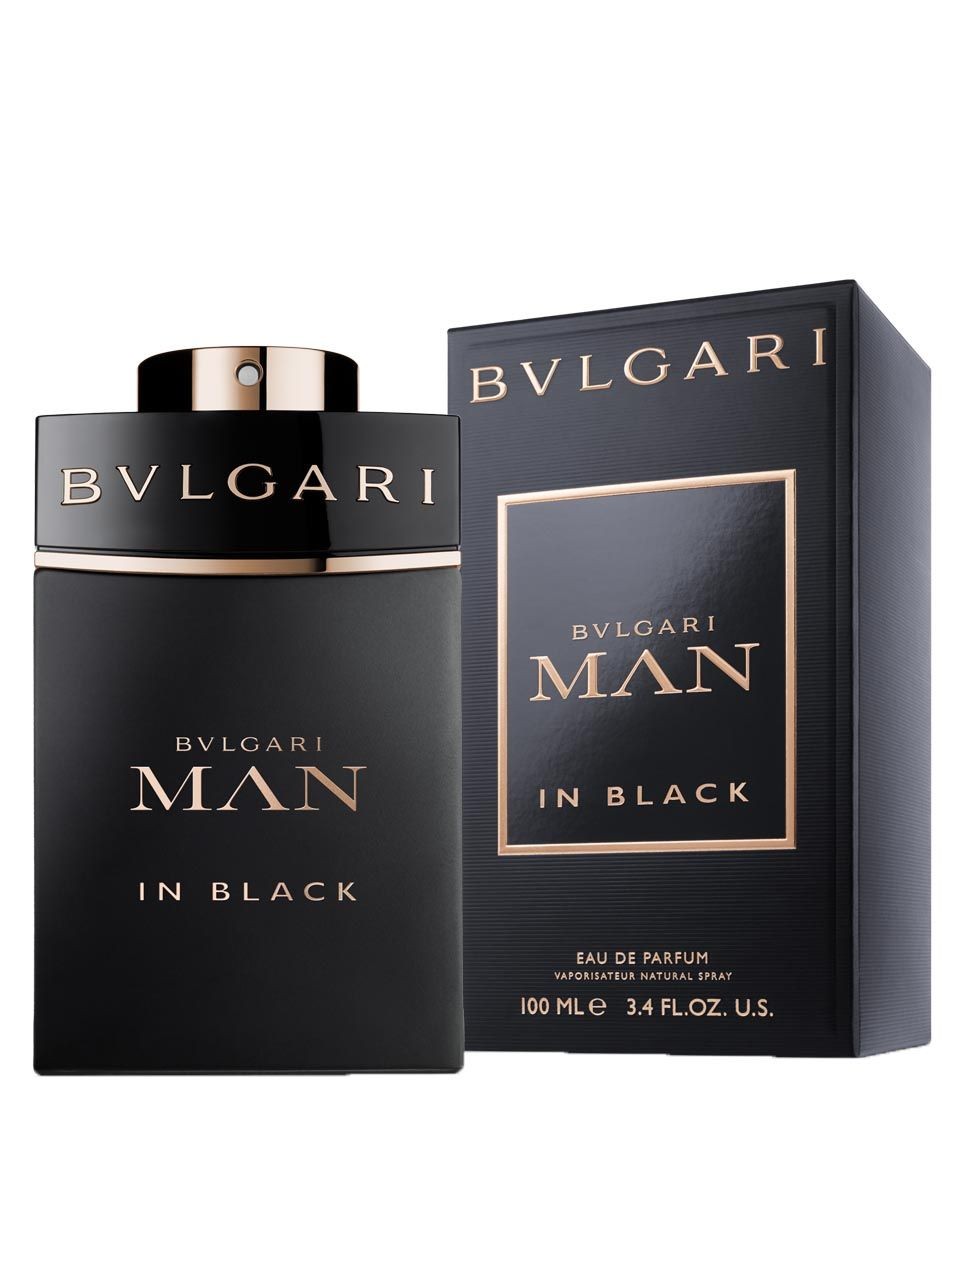 Bvlgari Man In Black Bvlgari cologne - a new fragrance for men 2014